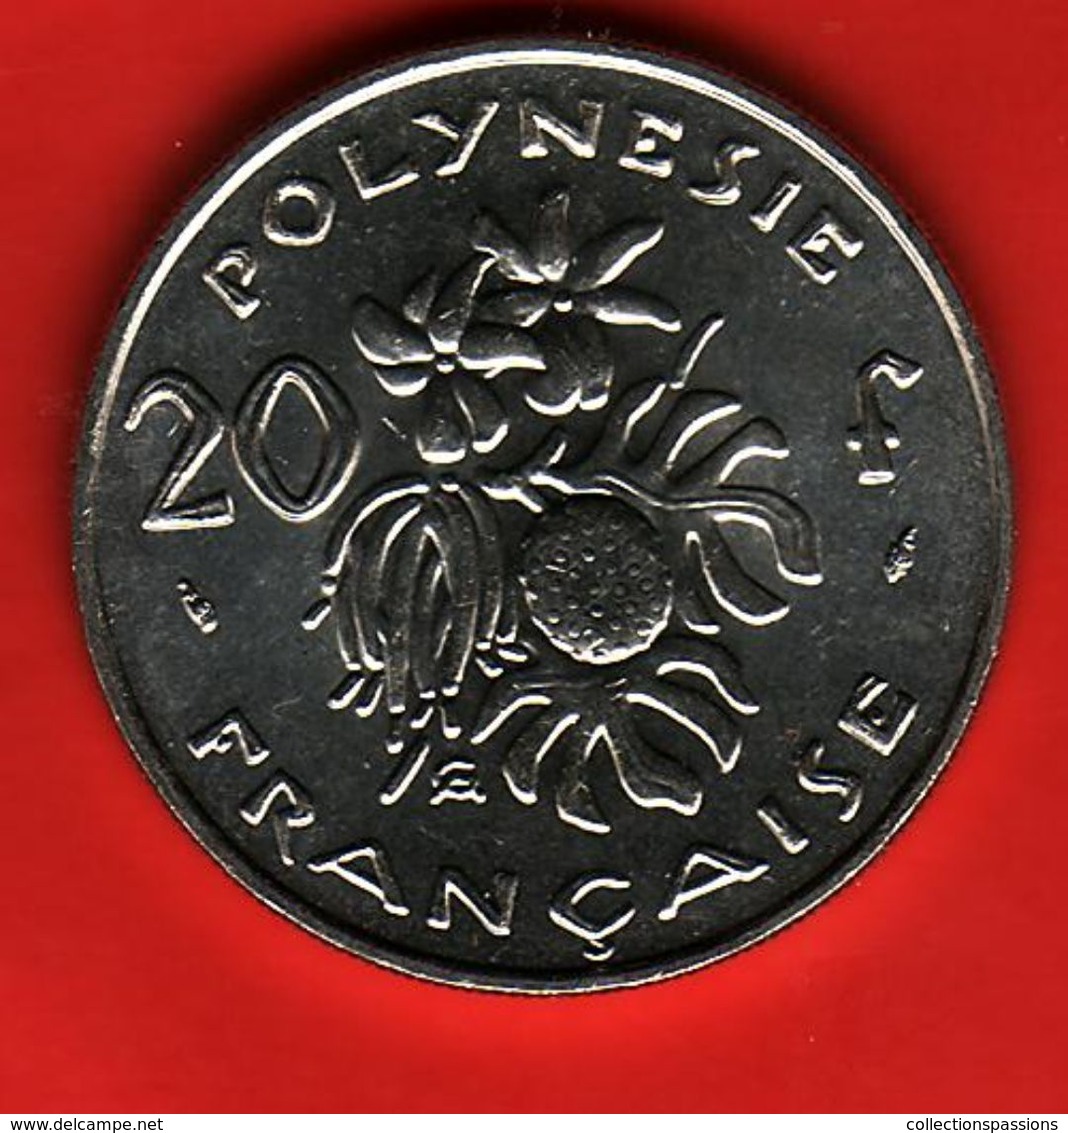 - POLYNESIE FRANCAISE - 20 Francs - 1993 - - Polynésie Française